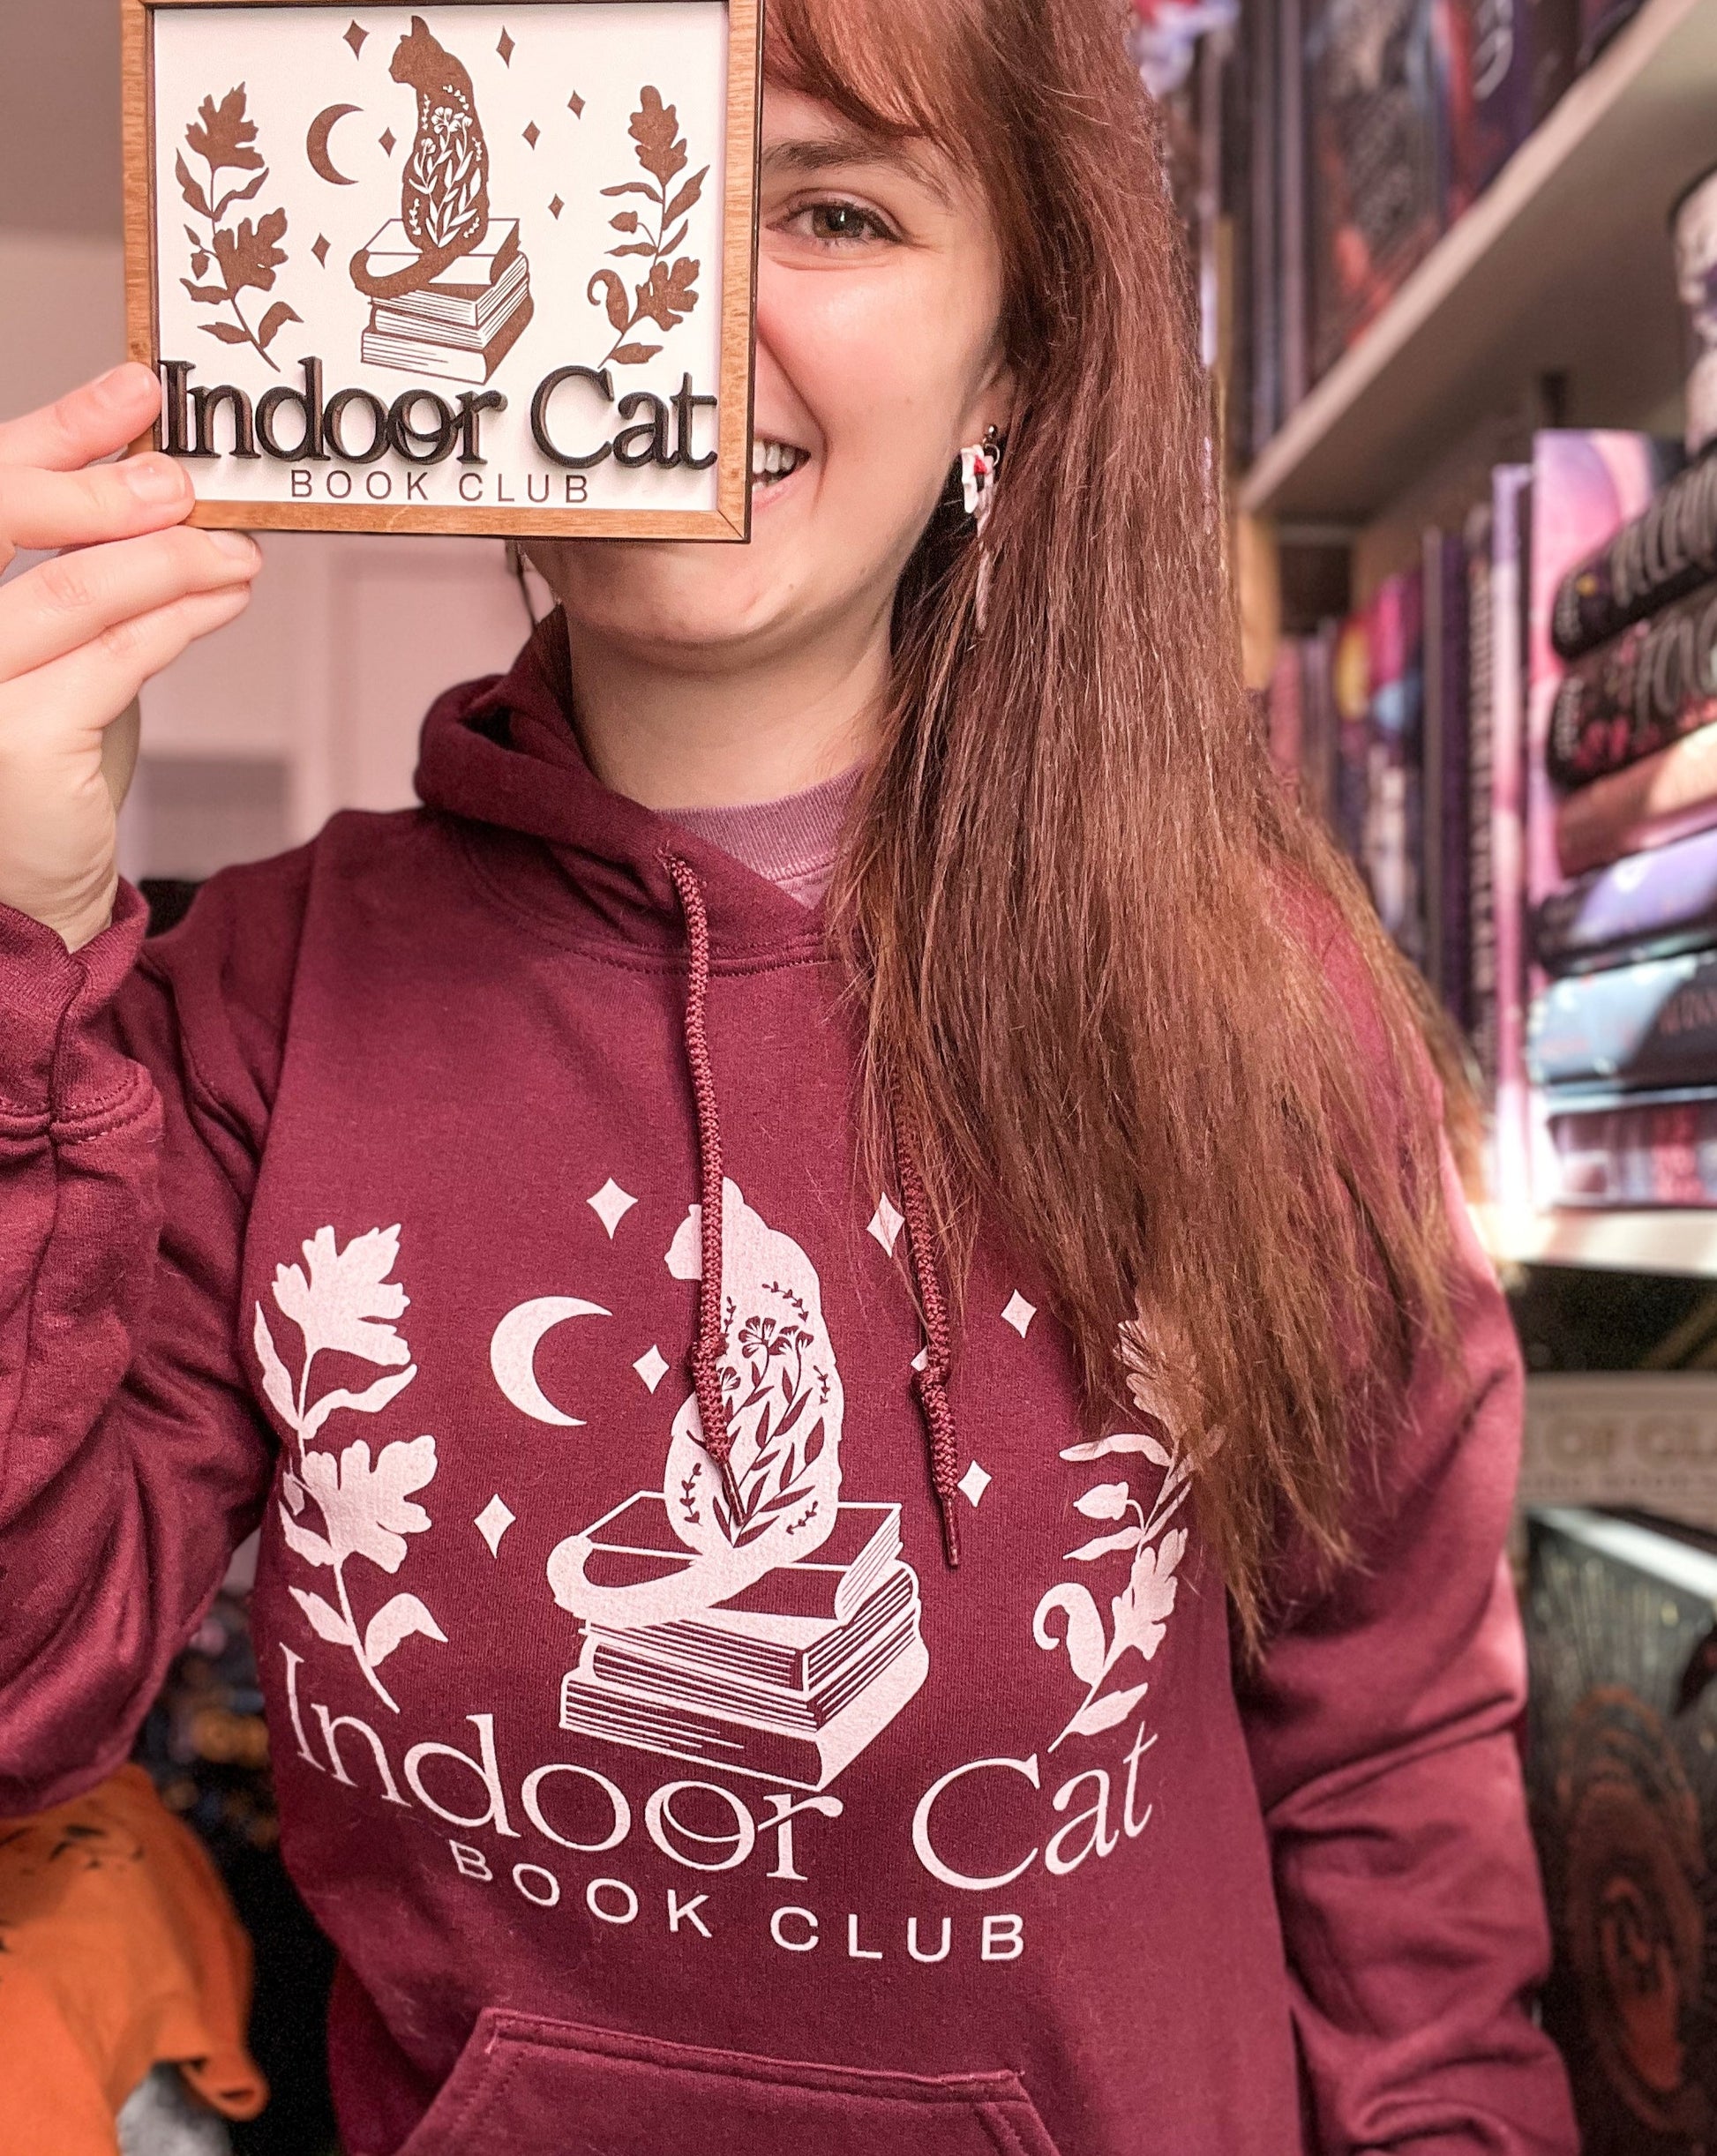 Woman next to bookshelf wearing indoor cat hoodie in maroon with white design